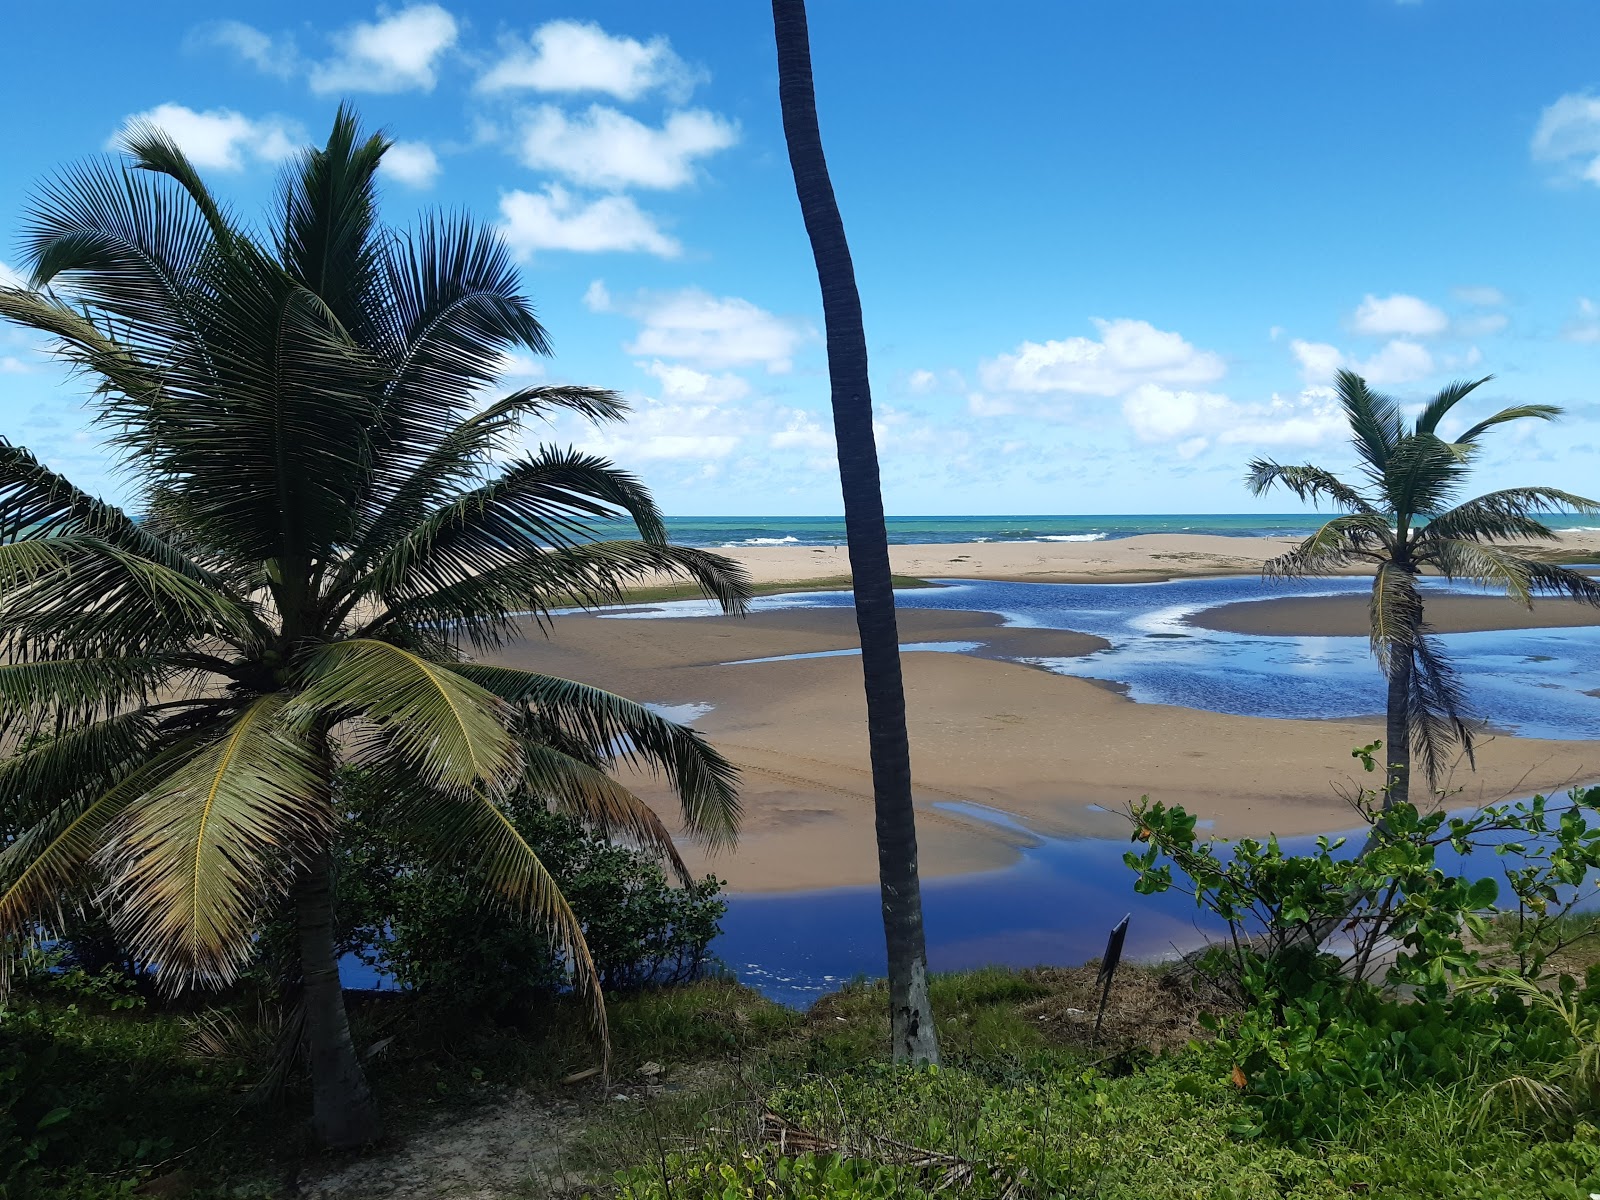 Foto de Praia de Imbassai - lugar popular entre os apreciadores de relaxamento